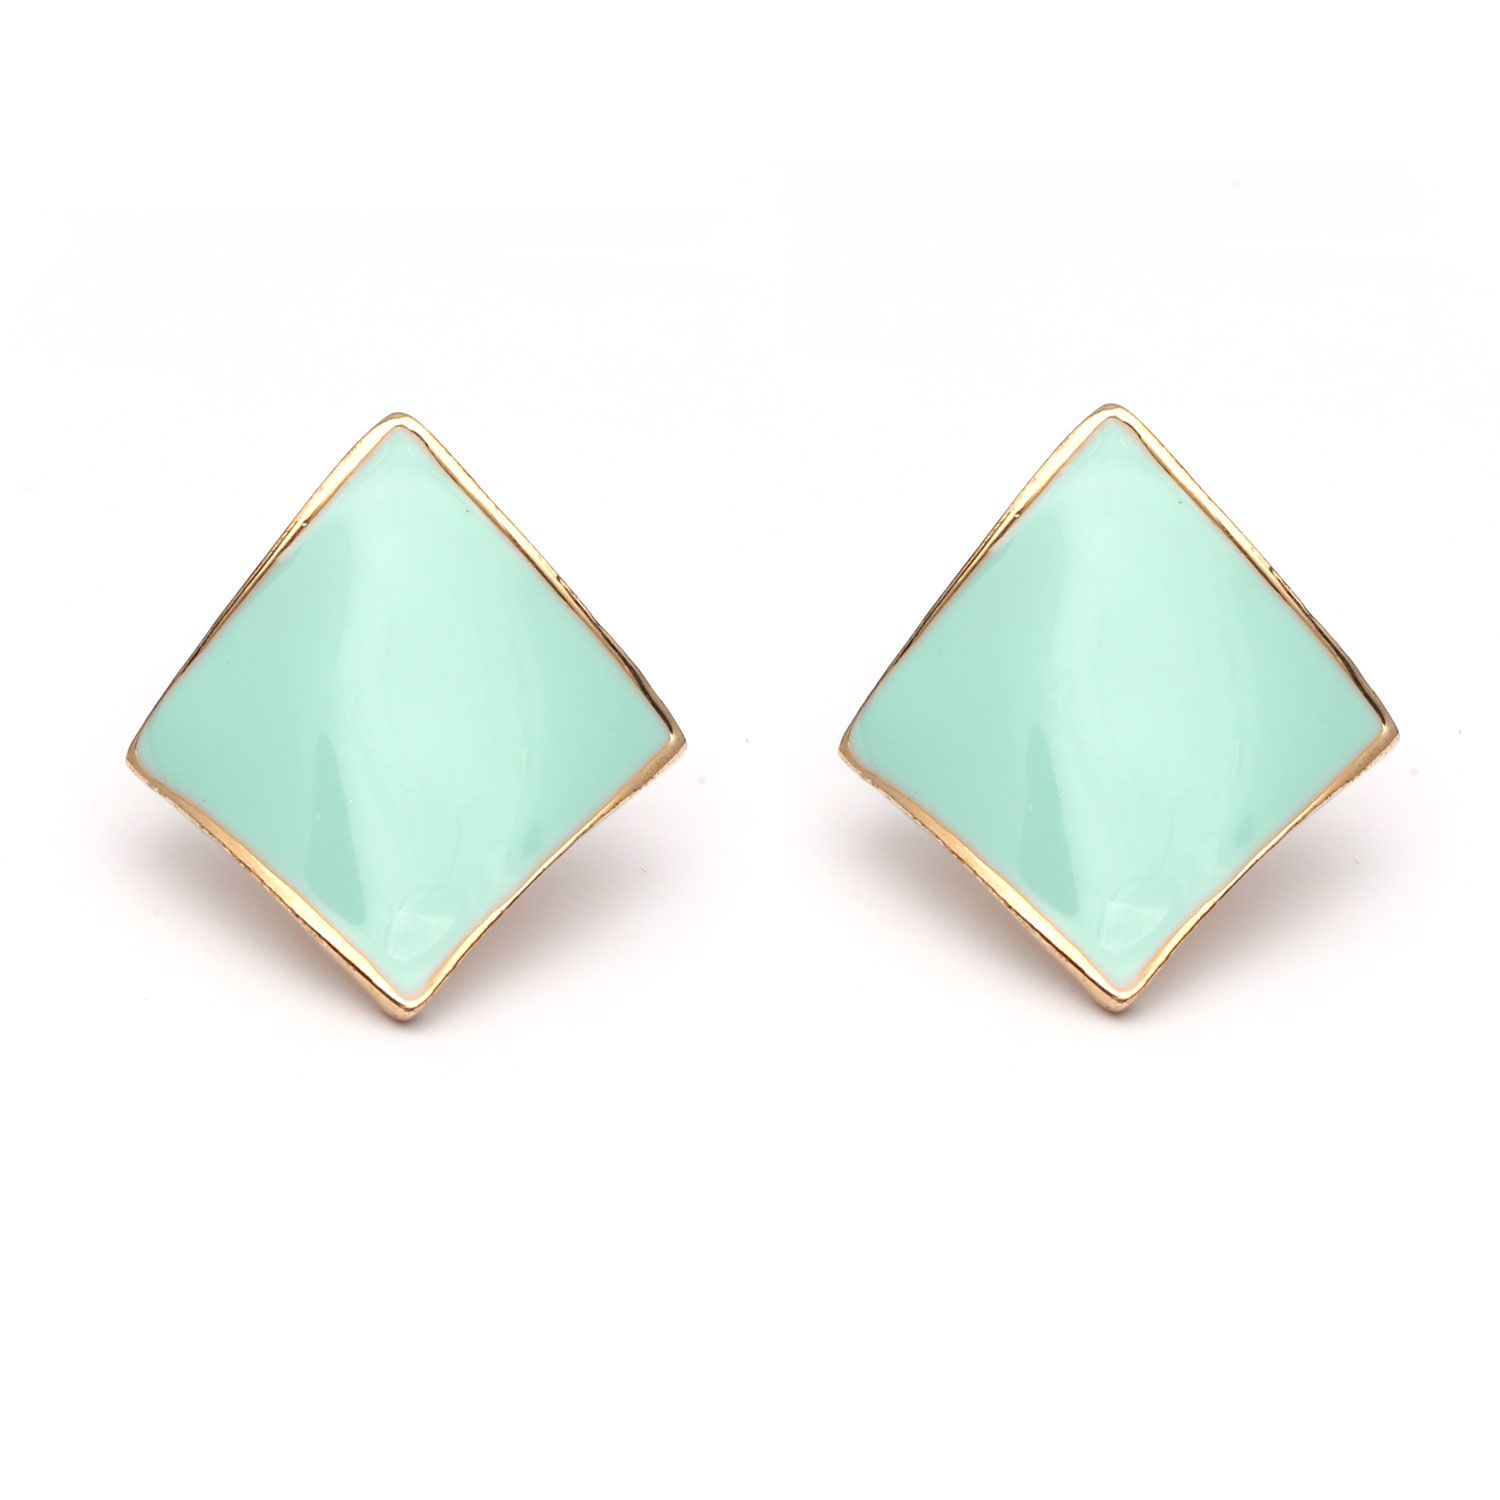 Turquoise coloured diamond shaped enamelled clip on earrings